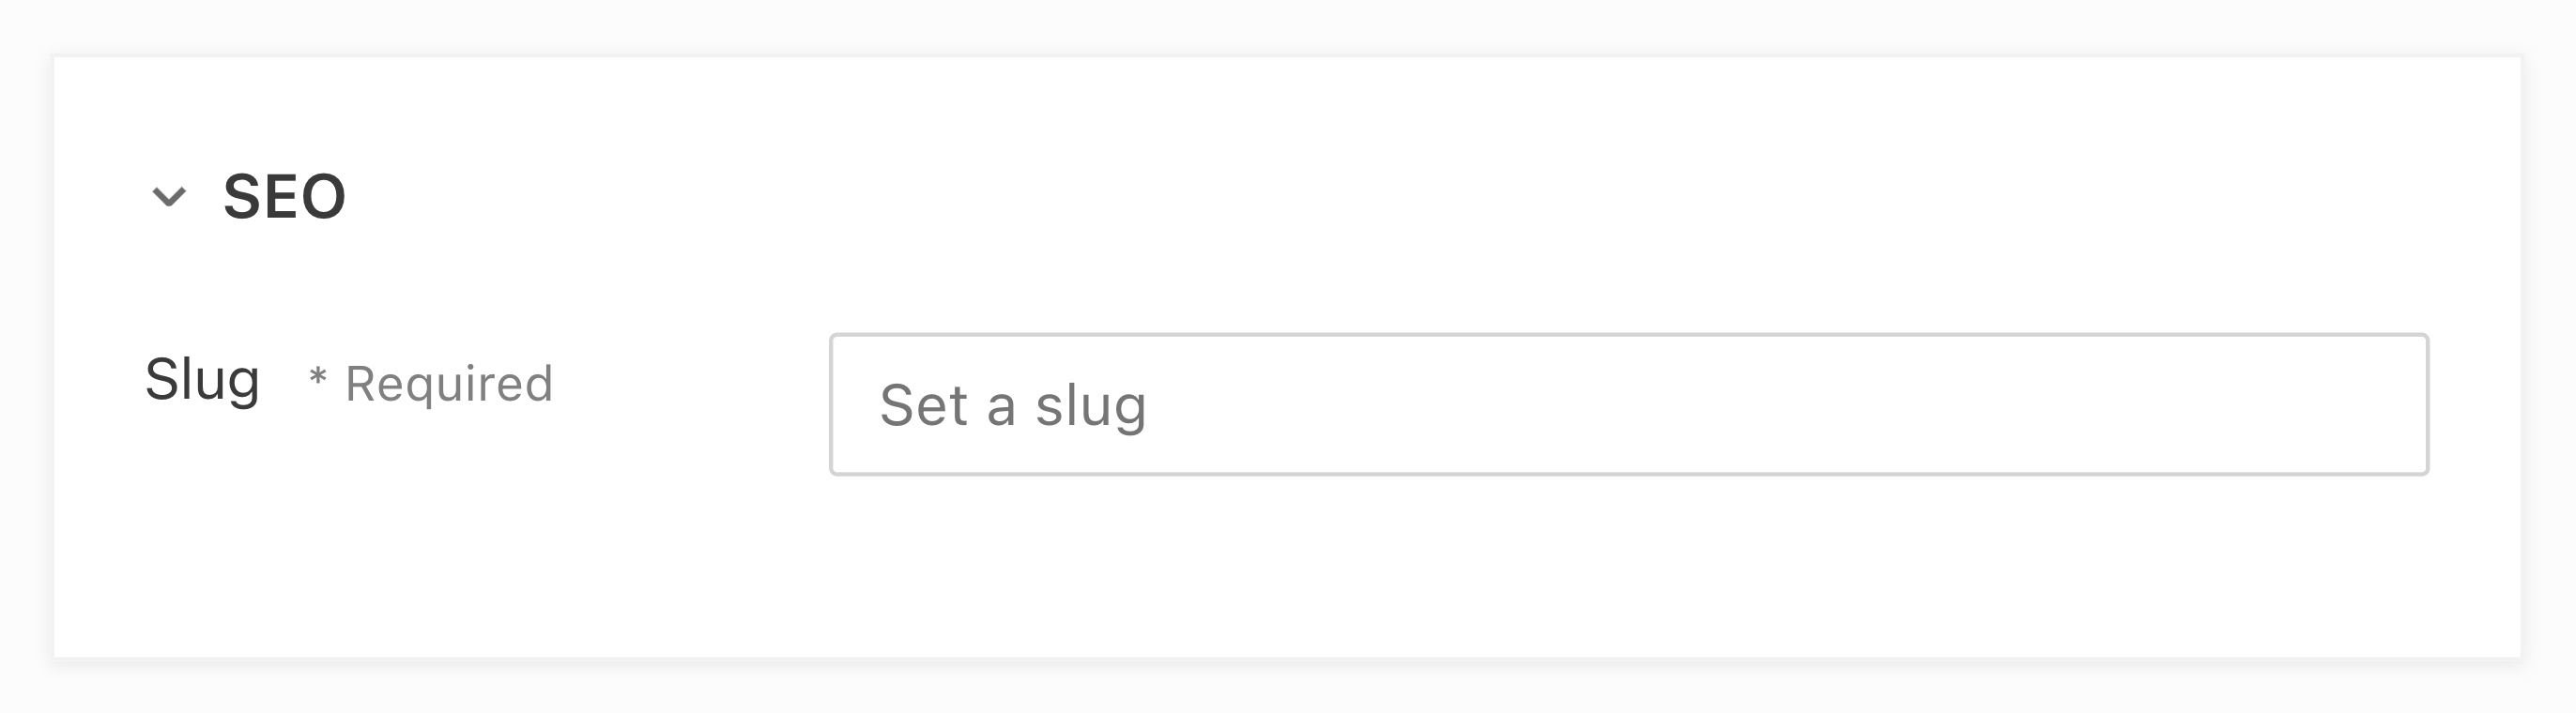 Slug form metadata